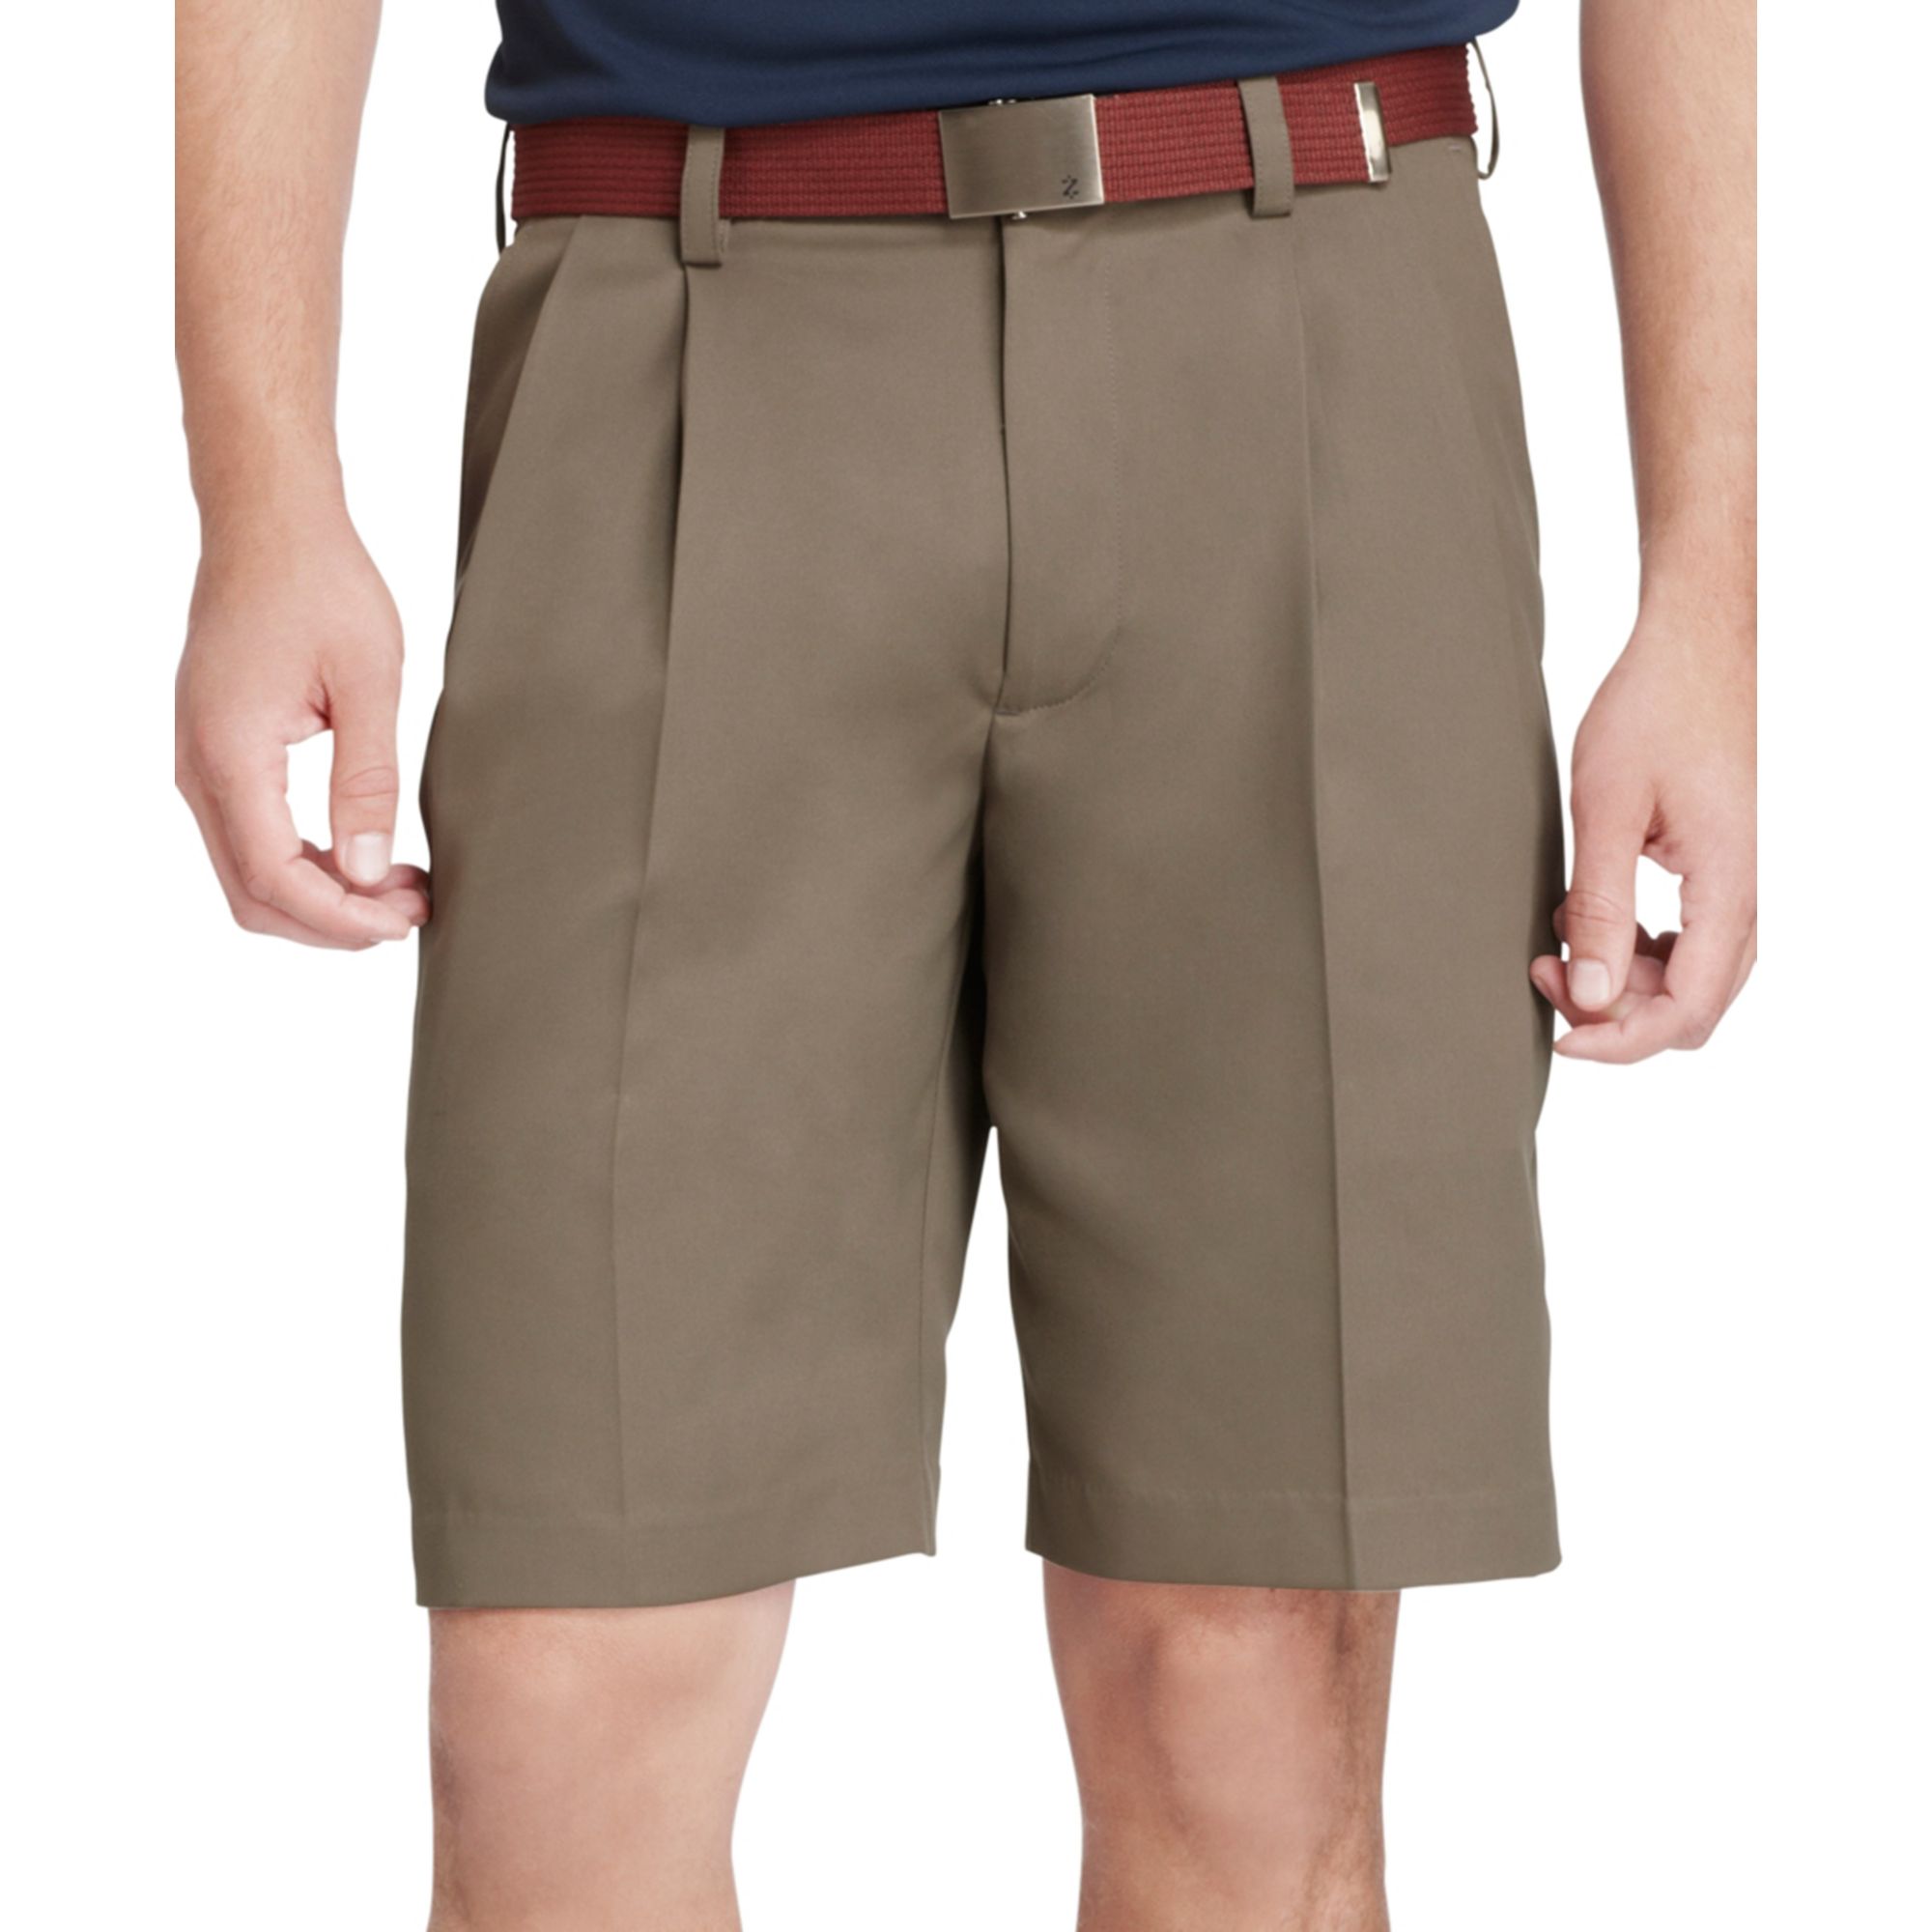 Lyst - Izod Double Pleat Shorts in Brown for Men